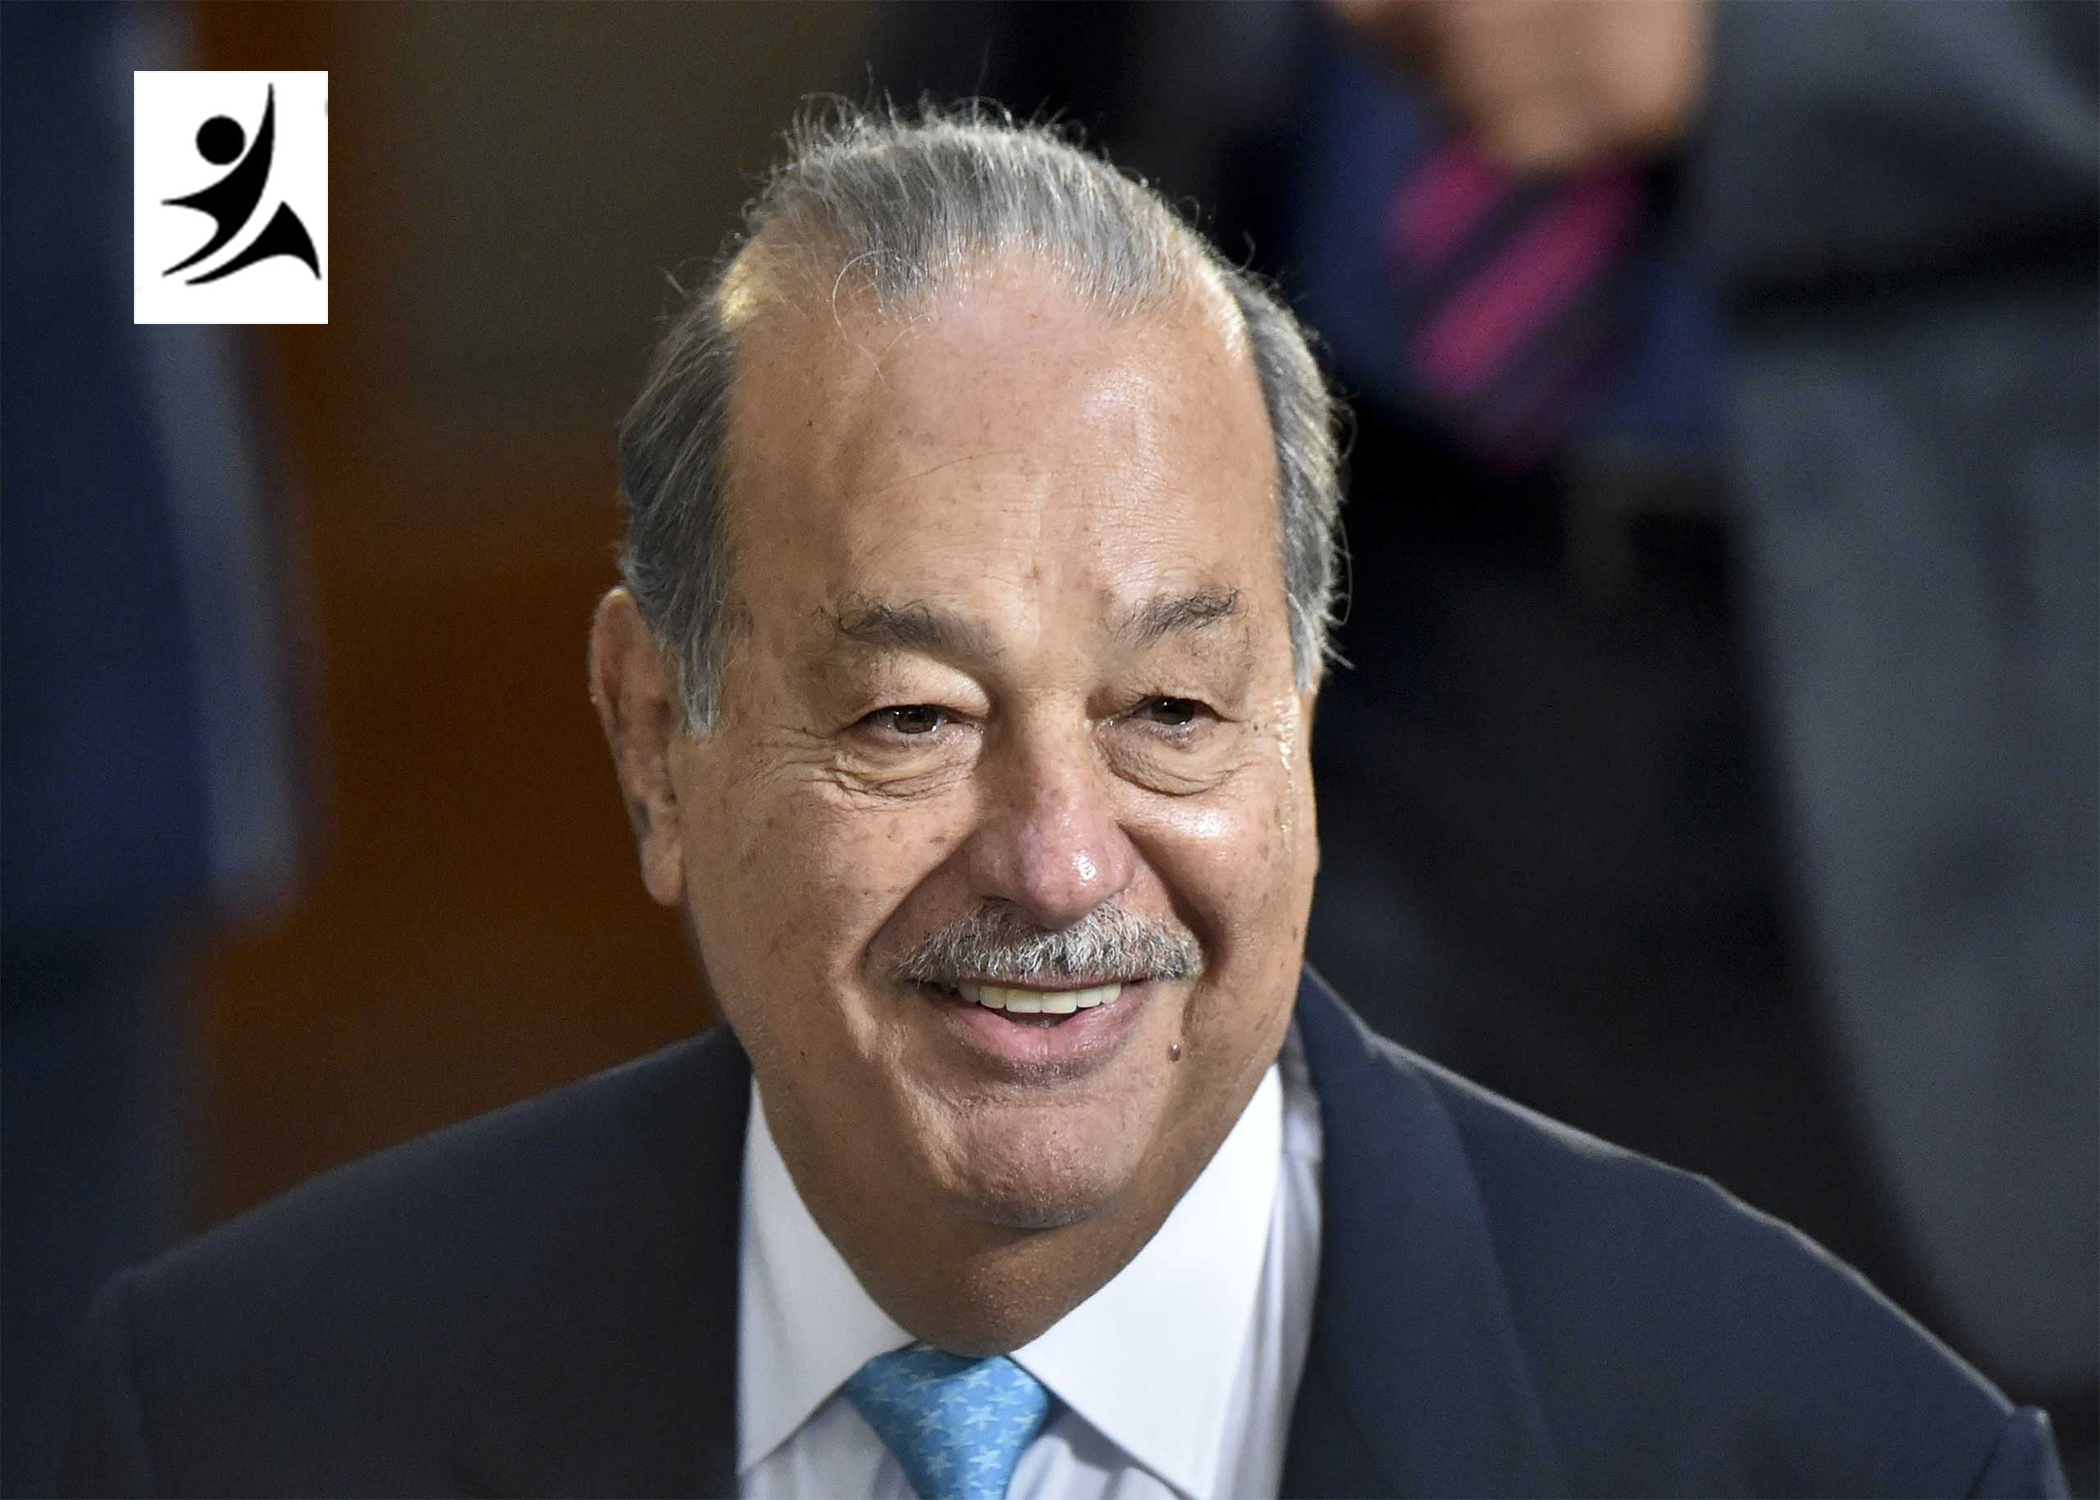 Carlos Slim - Wikipedia